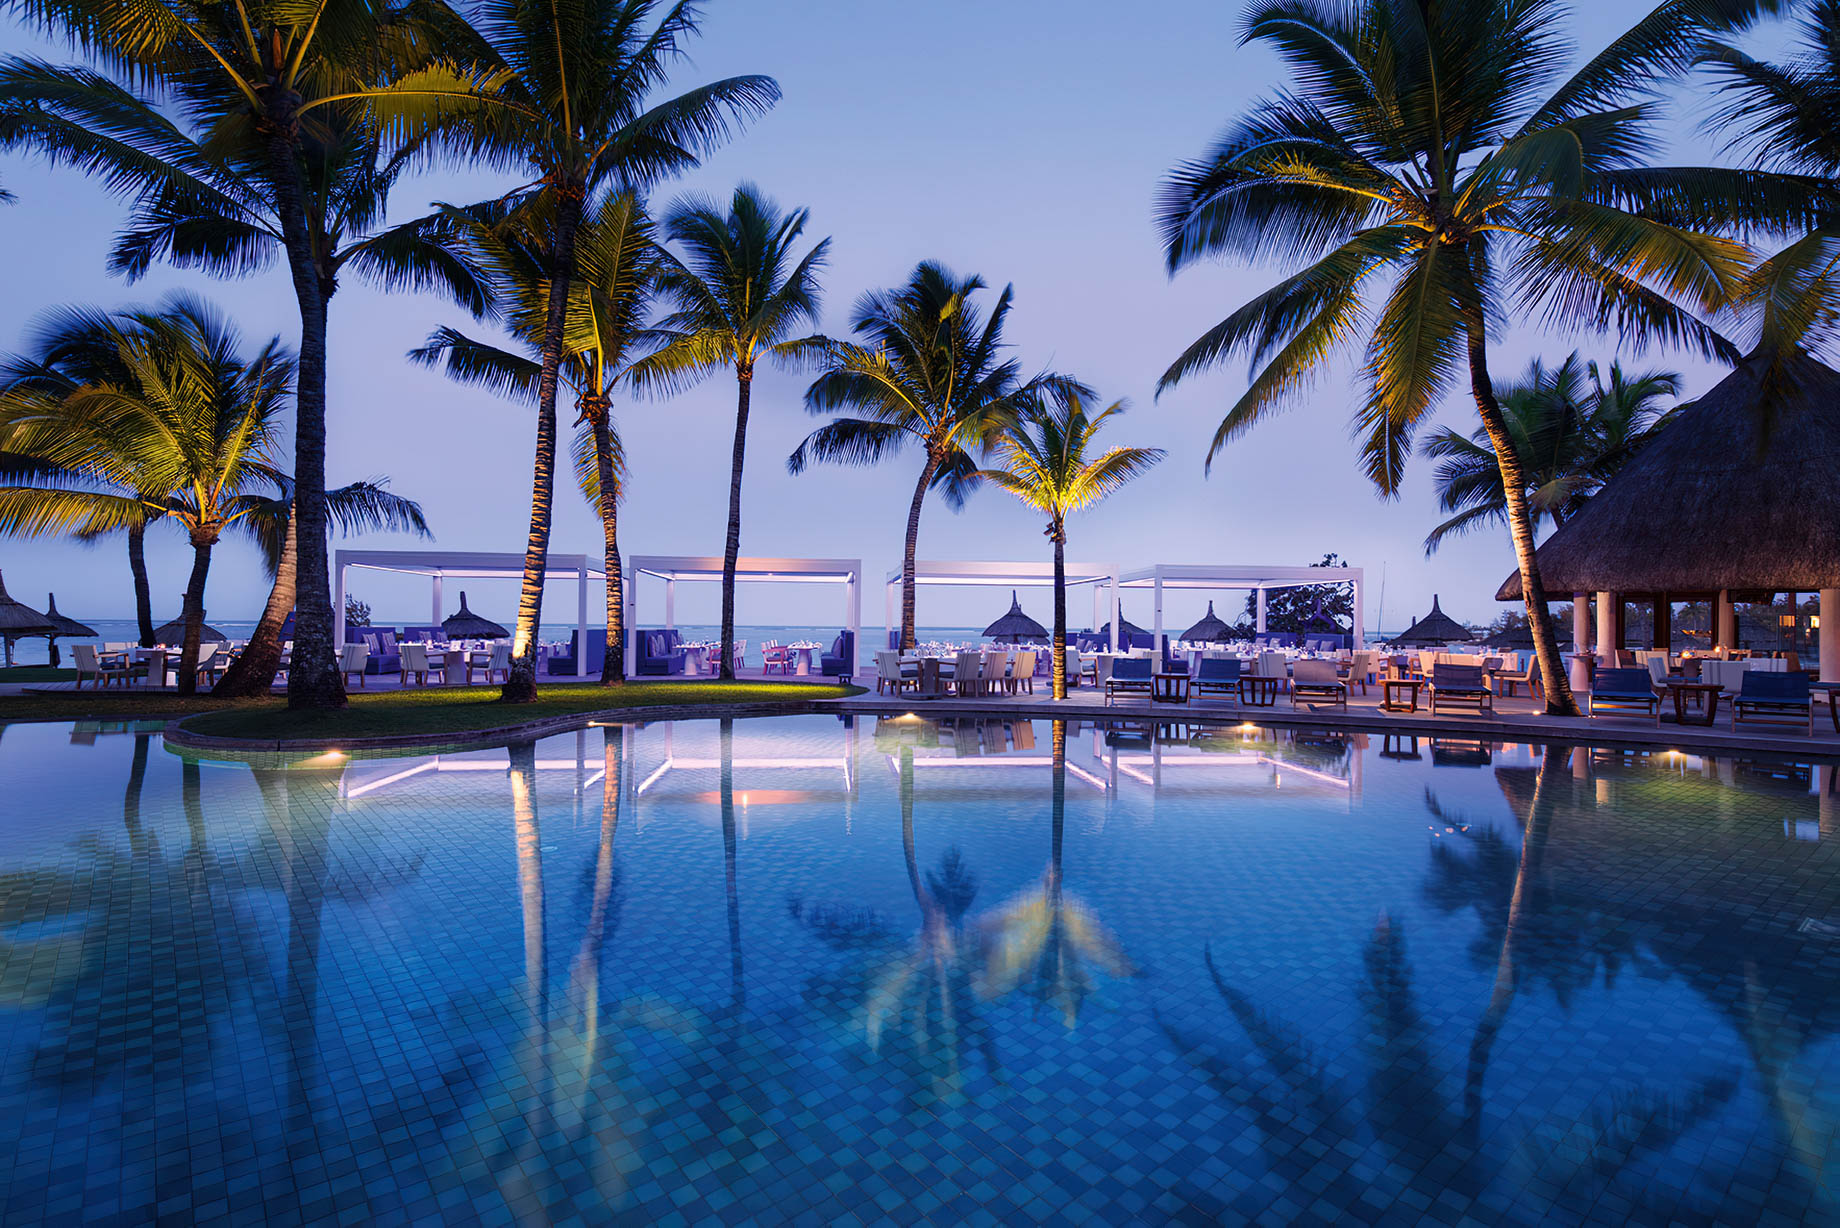 Constance Belle Mare Plage Resort – Mauritius – Indigo Restaurant Outdoor Dining